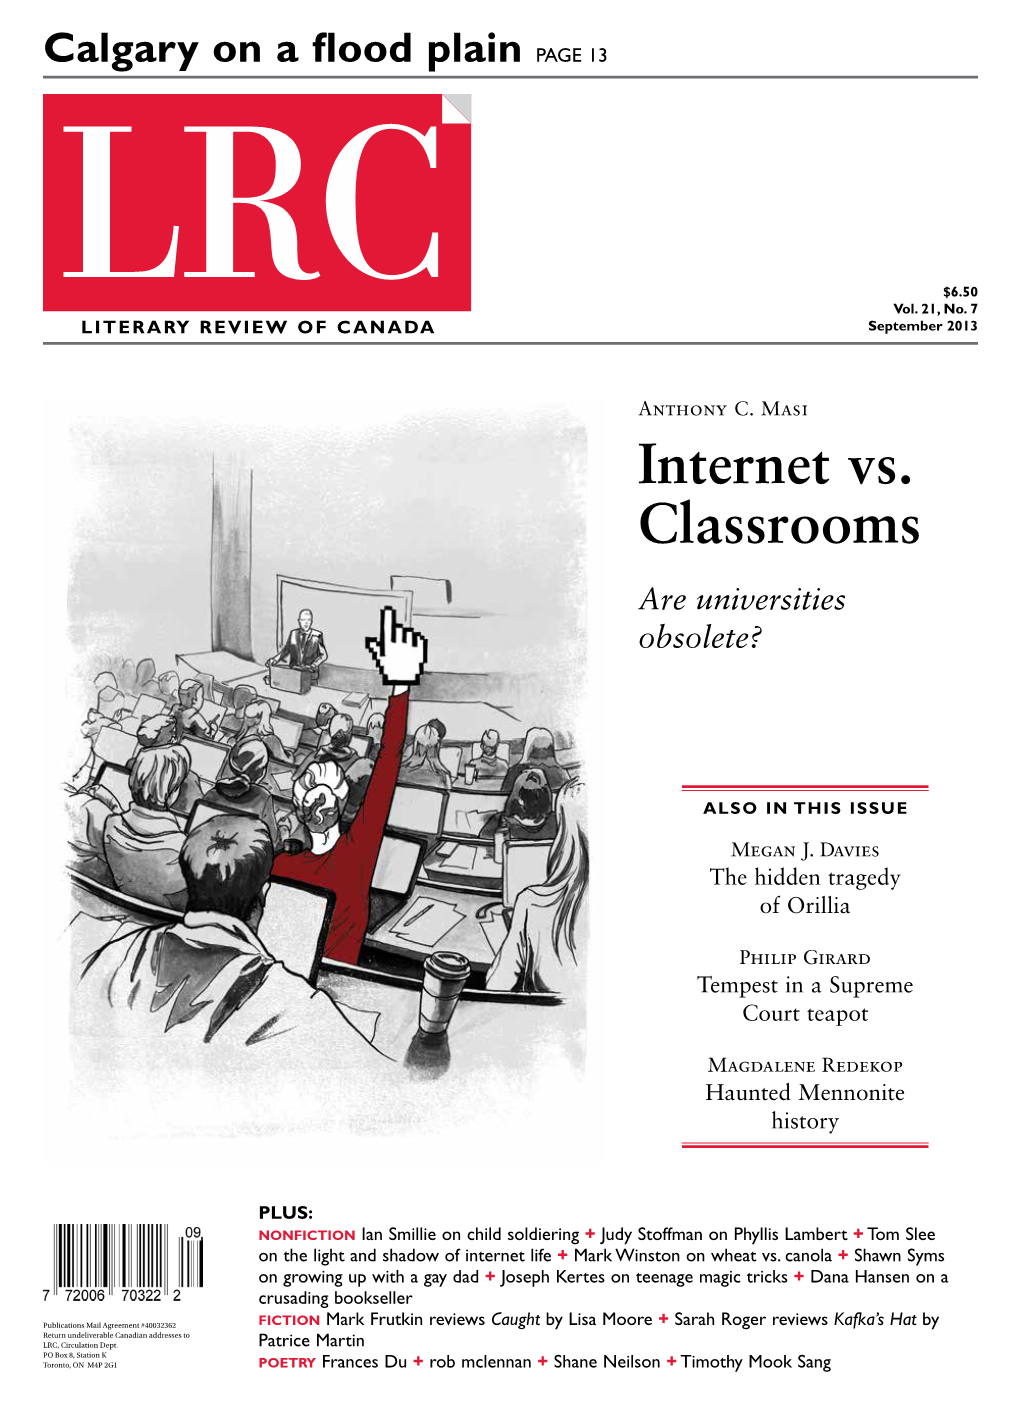 Internet Vs. Classrooms Are Universities Obsolete?